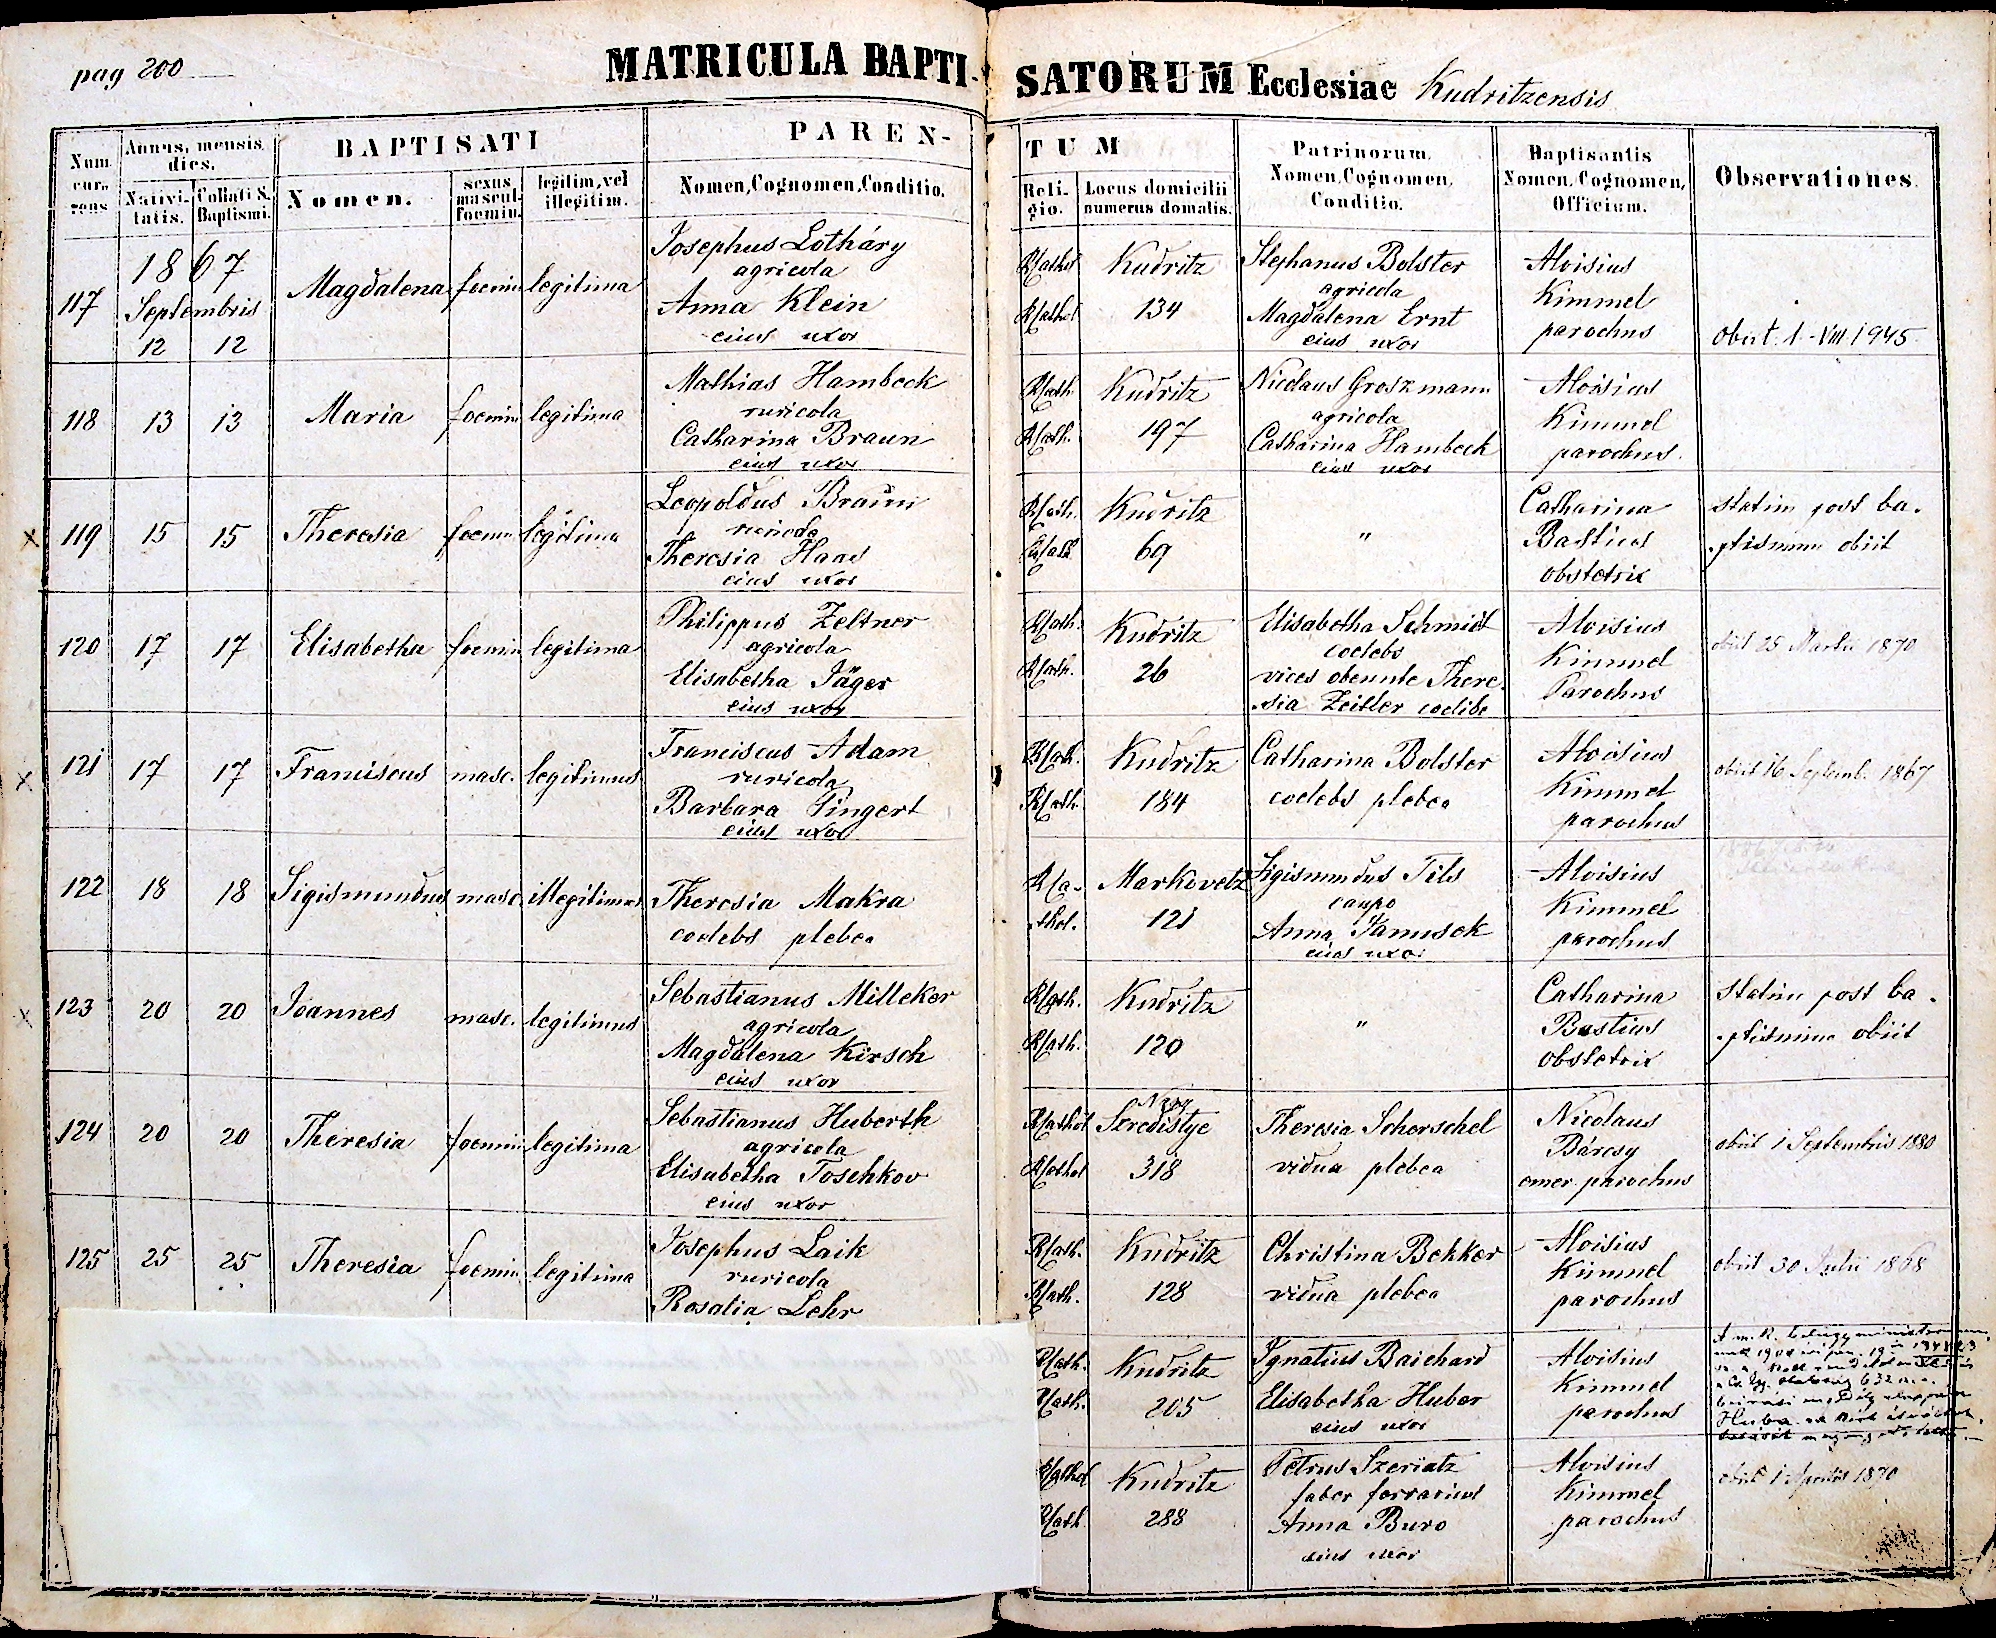 images/church_records/BIRTHS/1852-1870B/200-bez dodatka